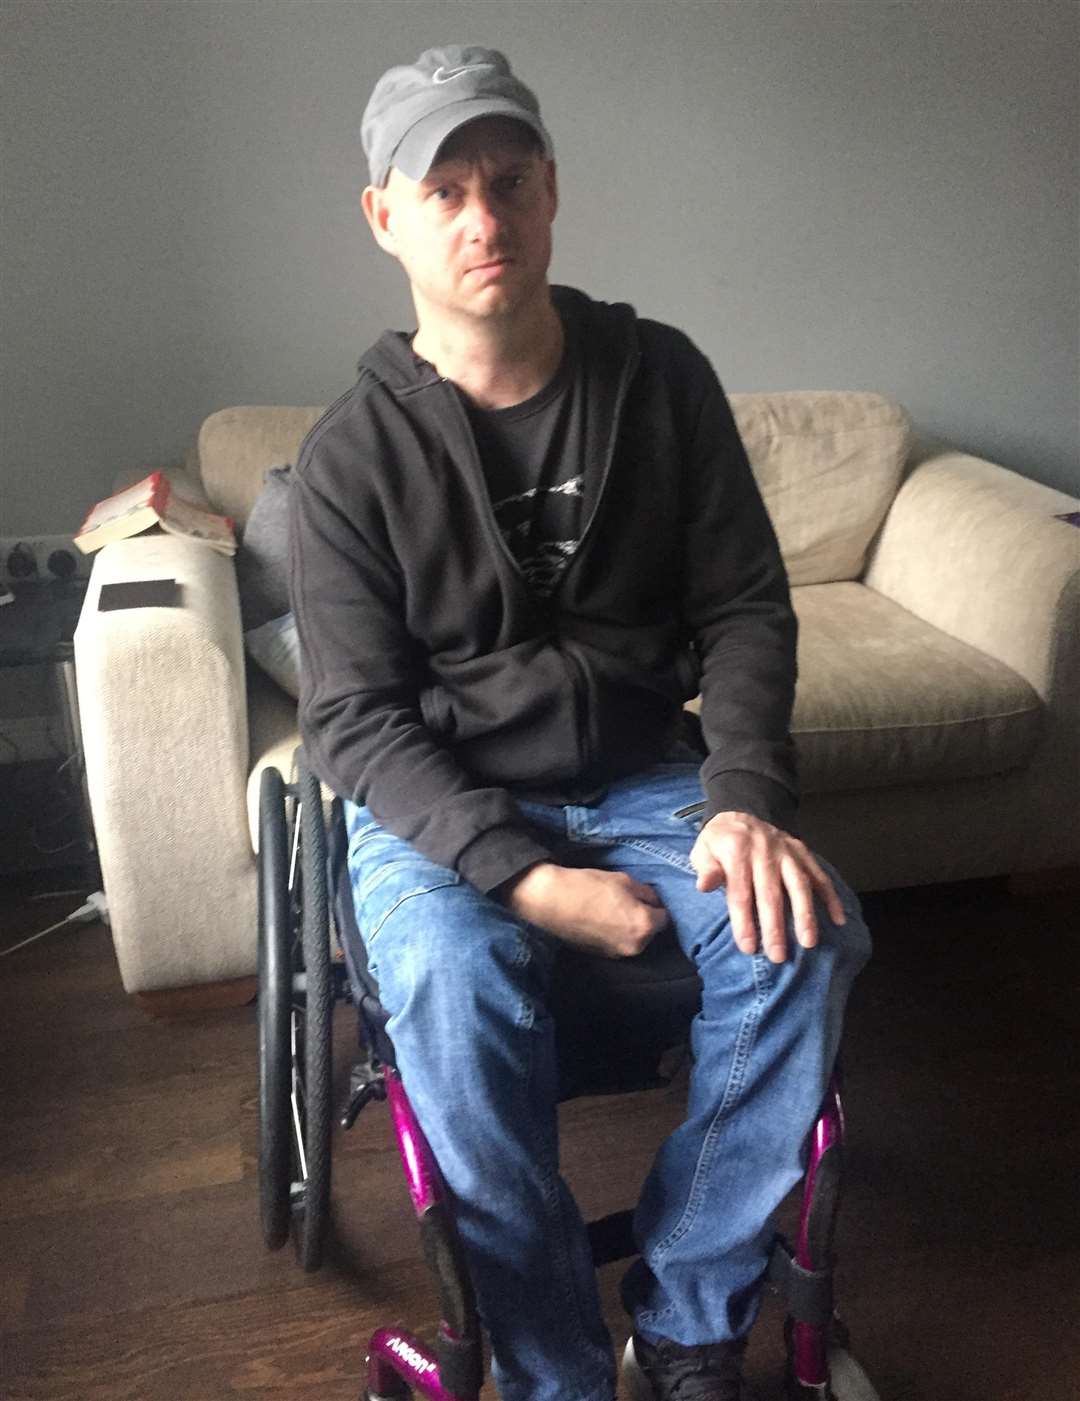 Wheelchair-bound Paul Rose is seeking damages